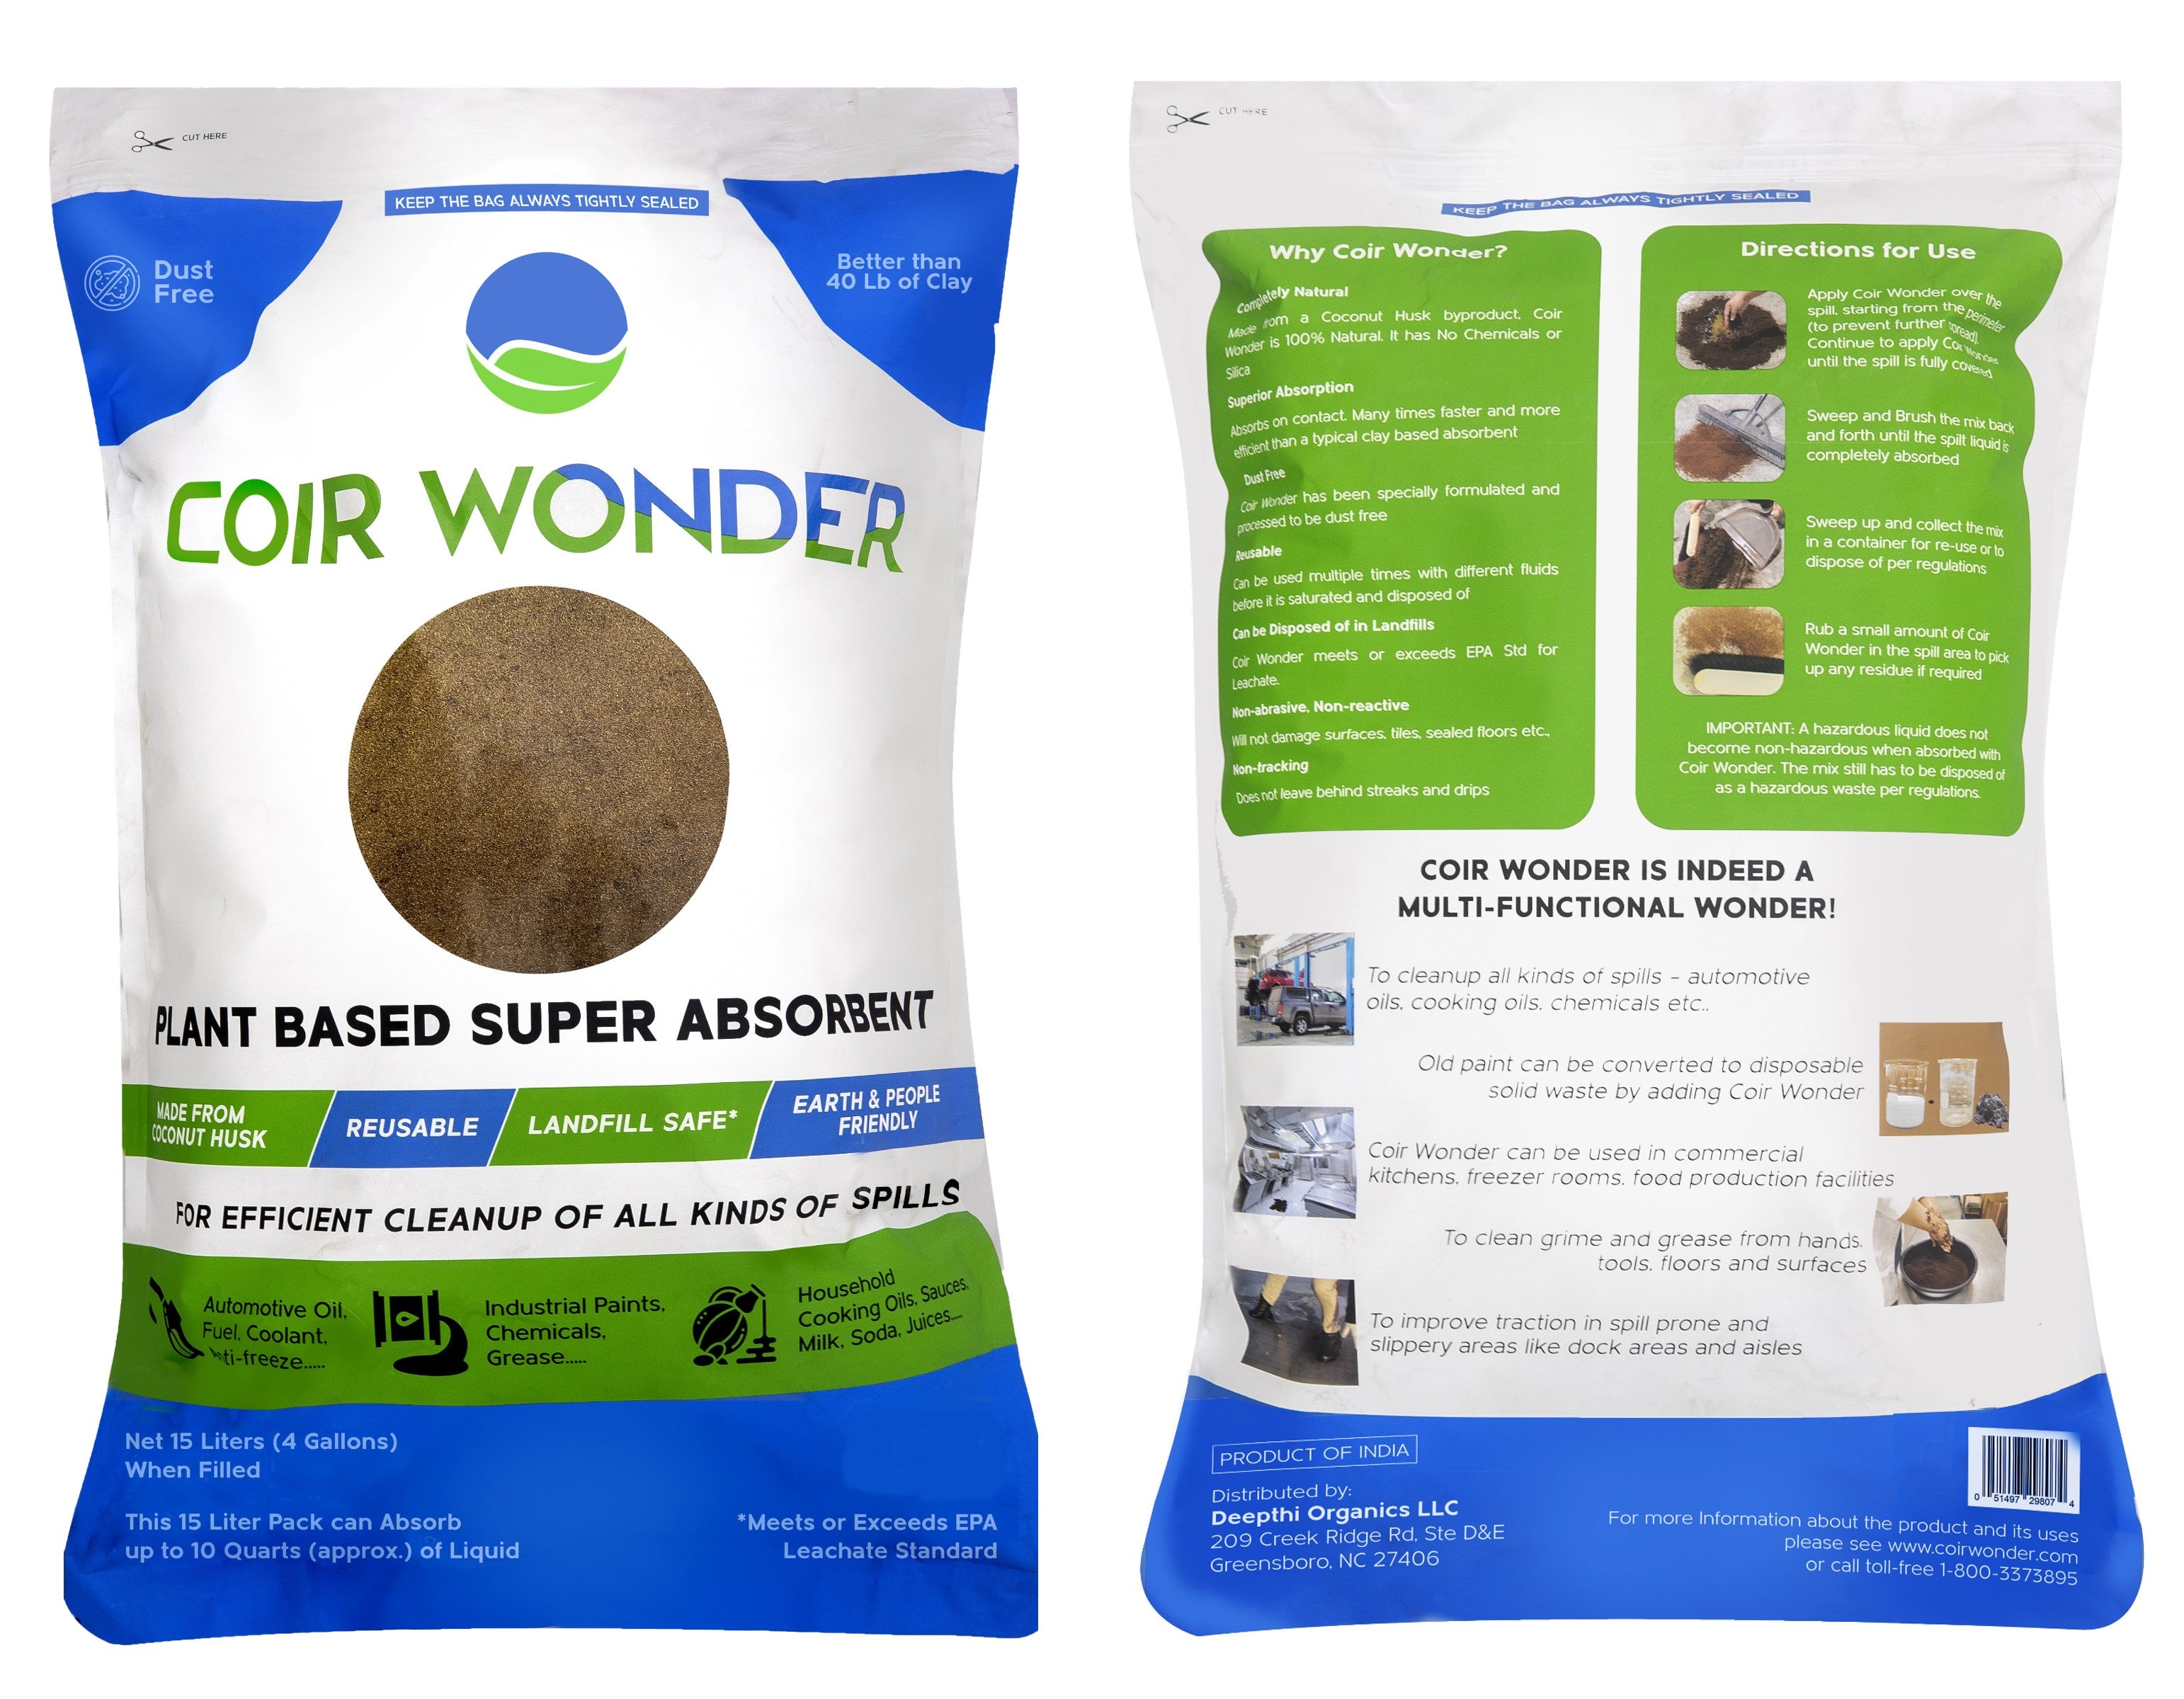 Coir Wonder - Super Absorbent Granules Made From Coconut Husk